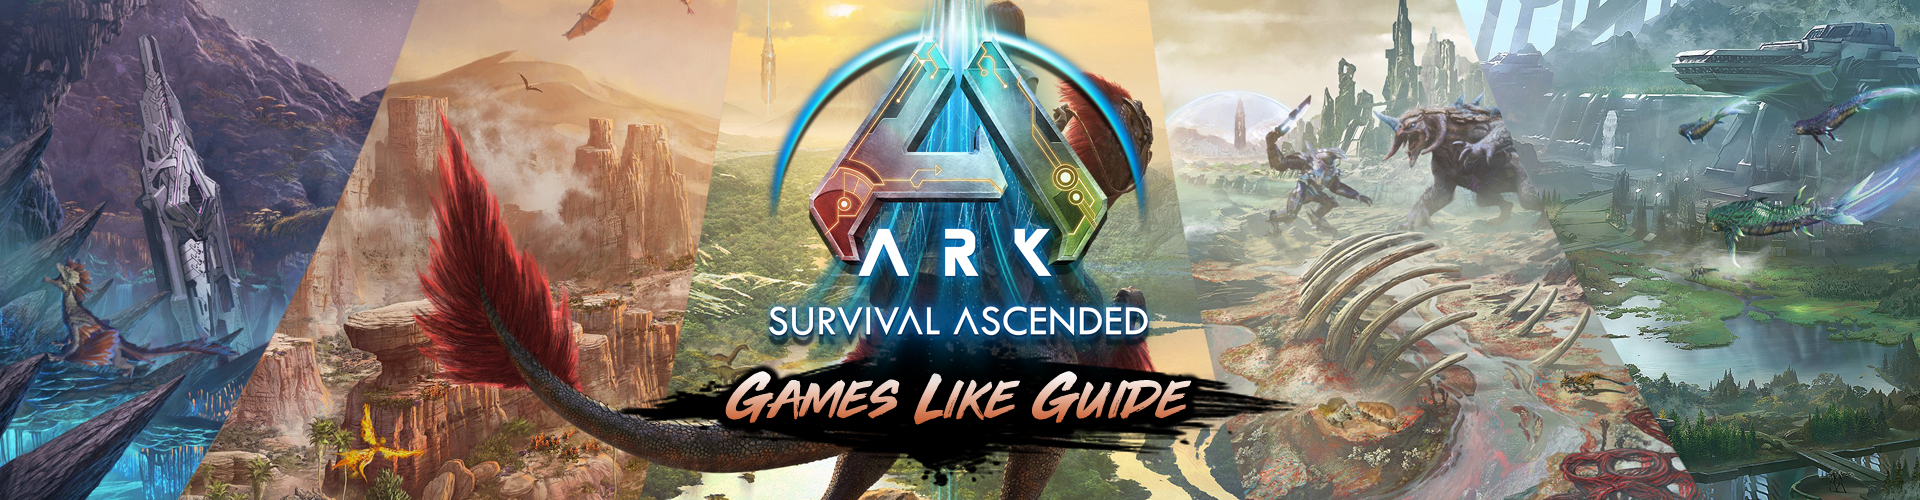 The Best Games Like ARK Survival Ascended